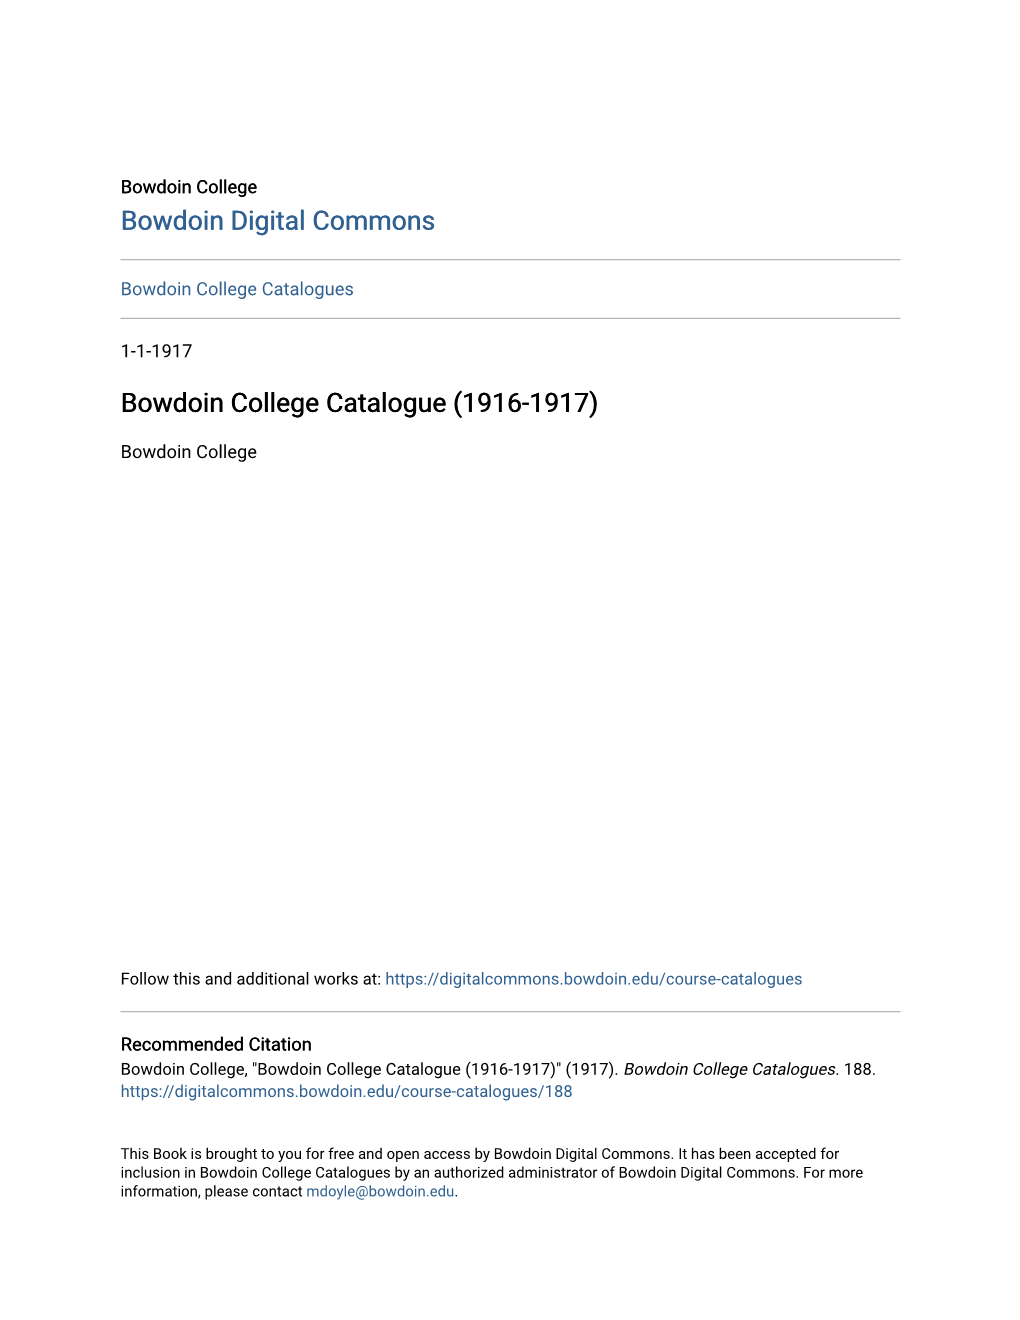 Bowdoin College Catalogue (1916-1917)